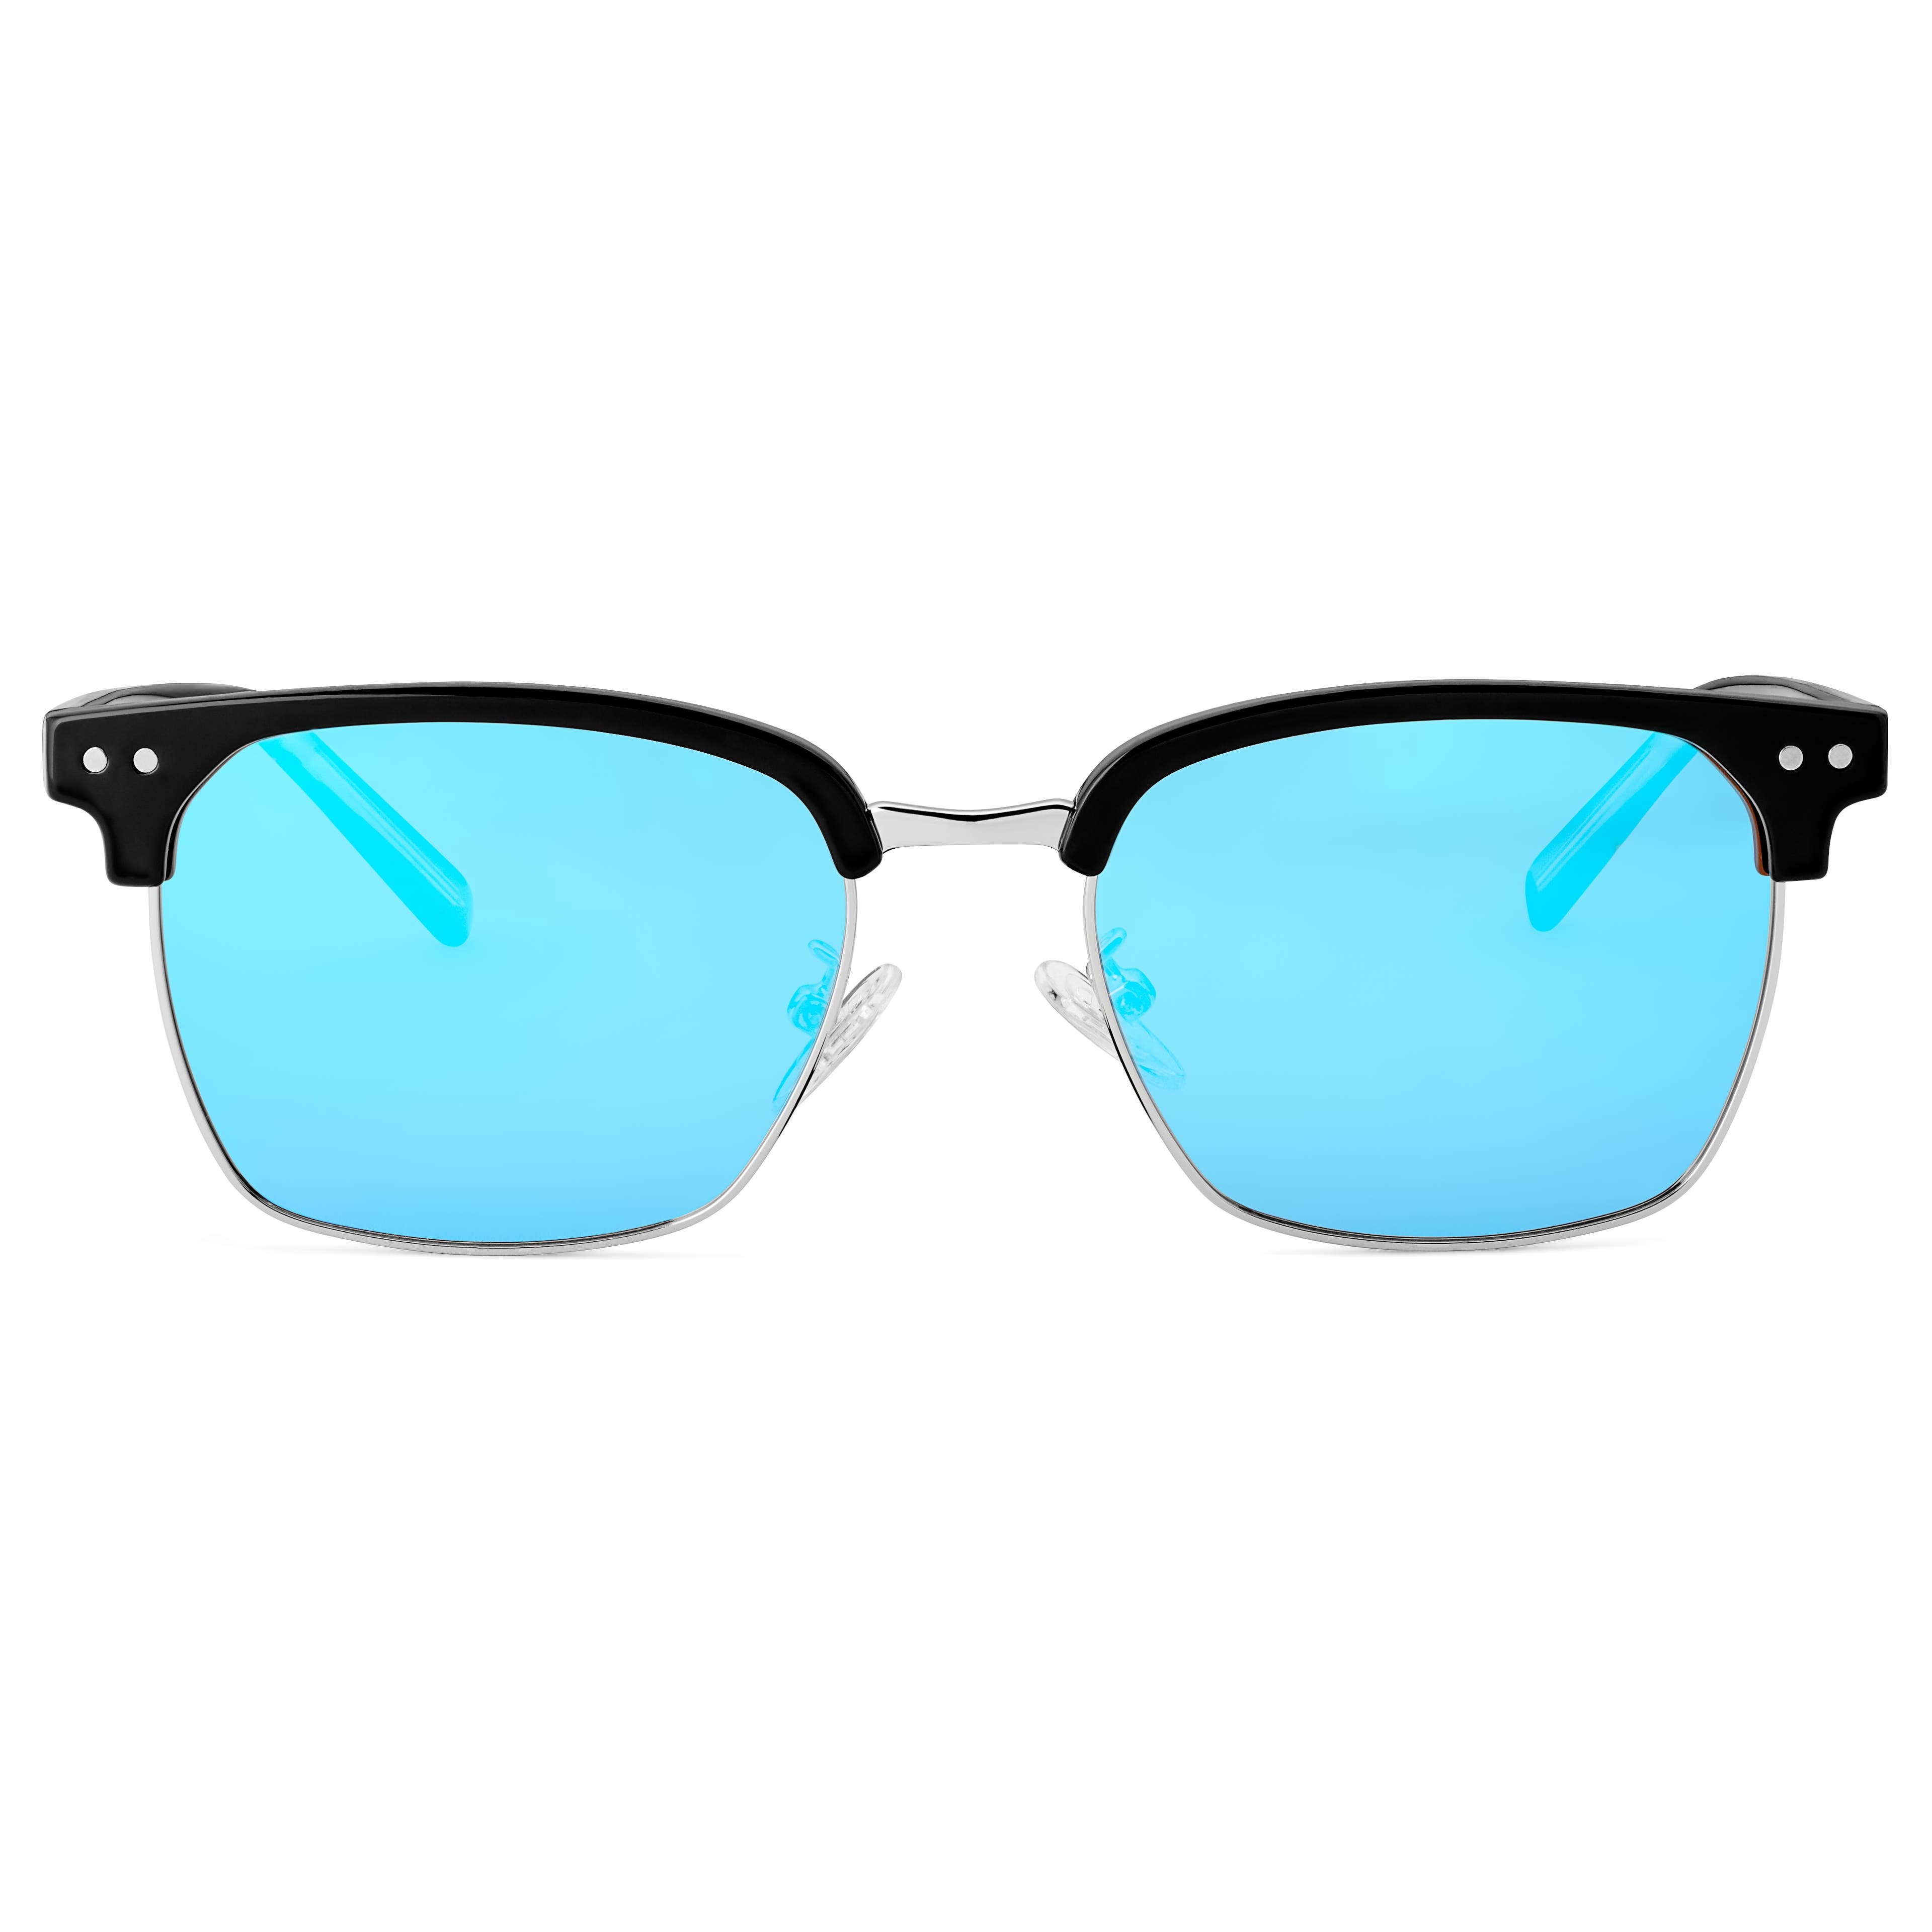 Buy Mens Blue Sunglasses Free Size Online